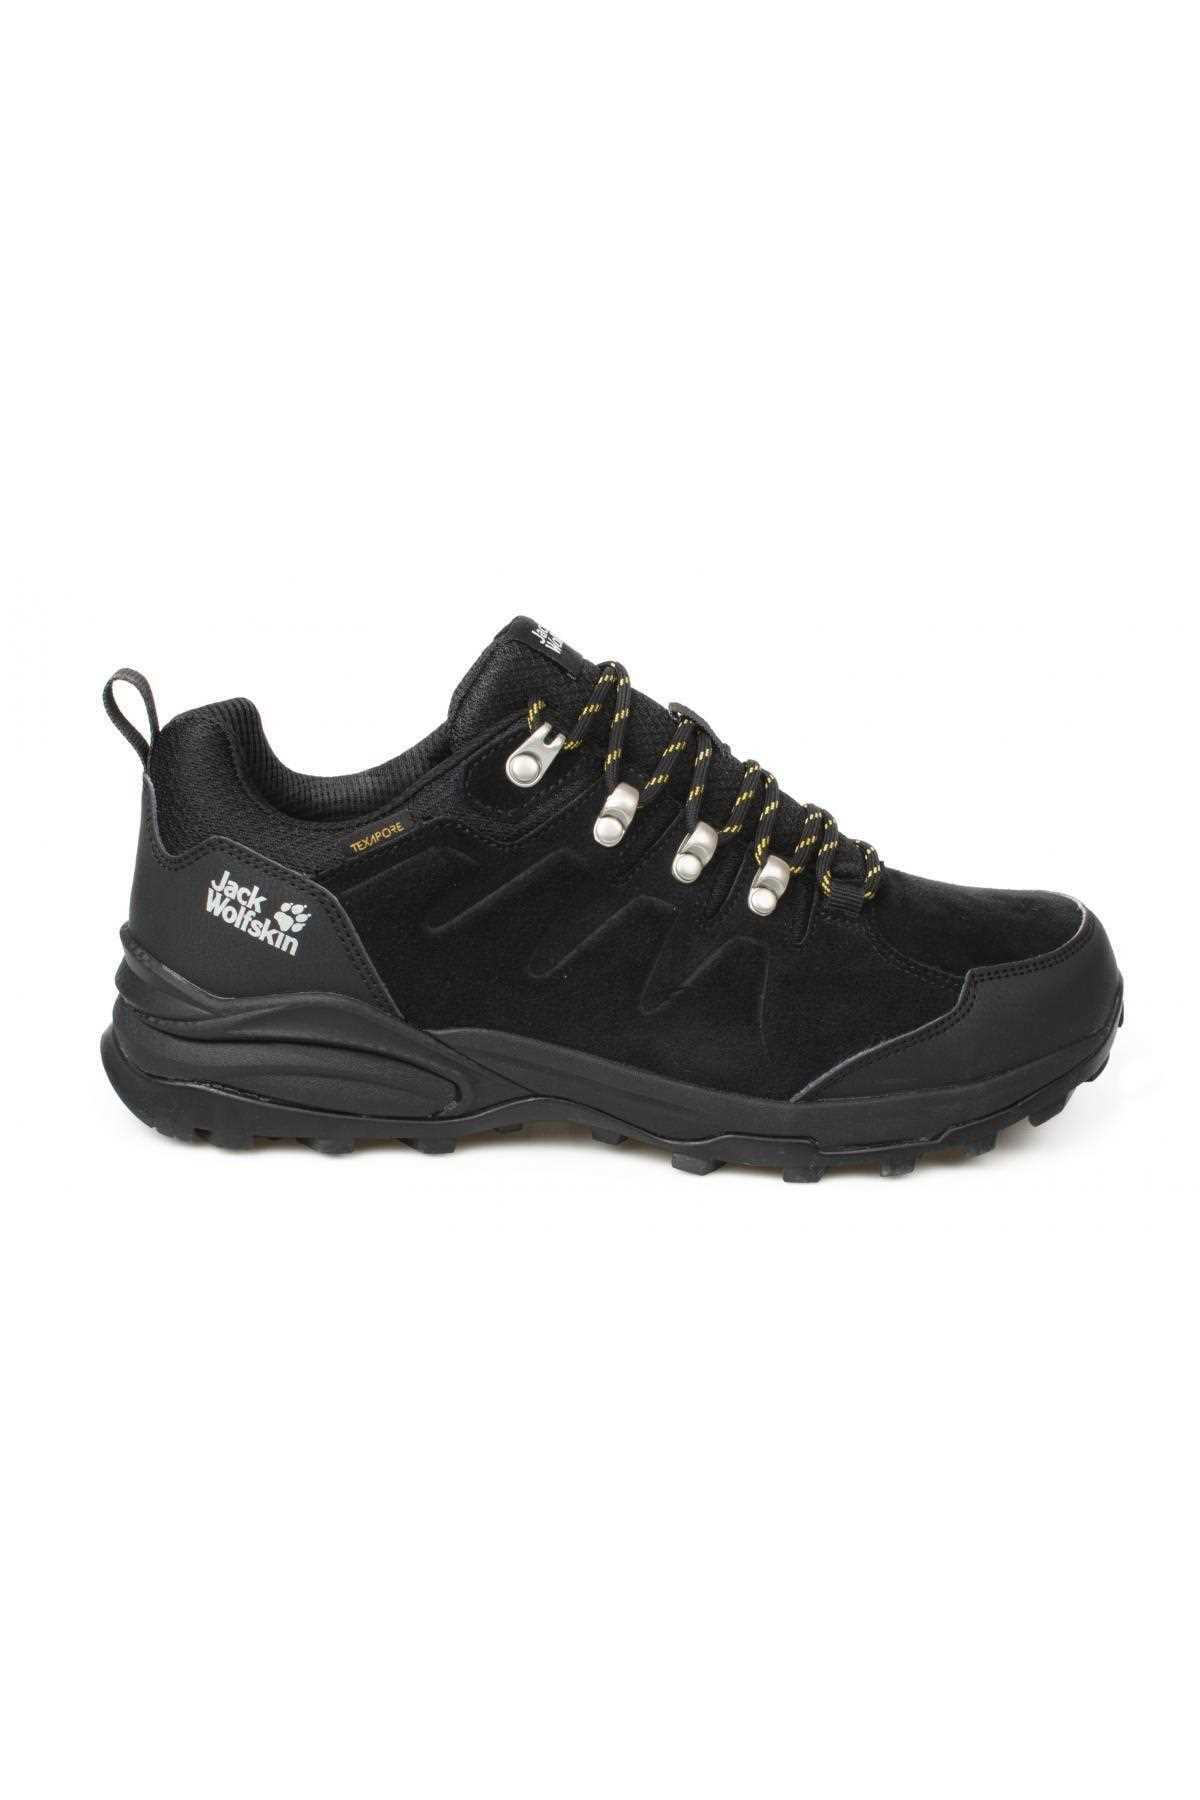 خرید کفش کوهنوردی مردانه مخصوص برف شیک Jack Wolfskin رنگ مشکی کد ty184653669